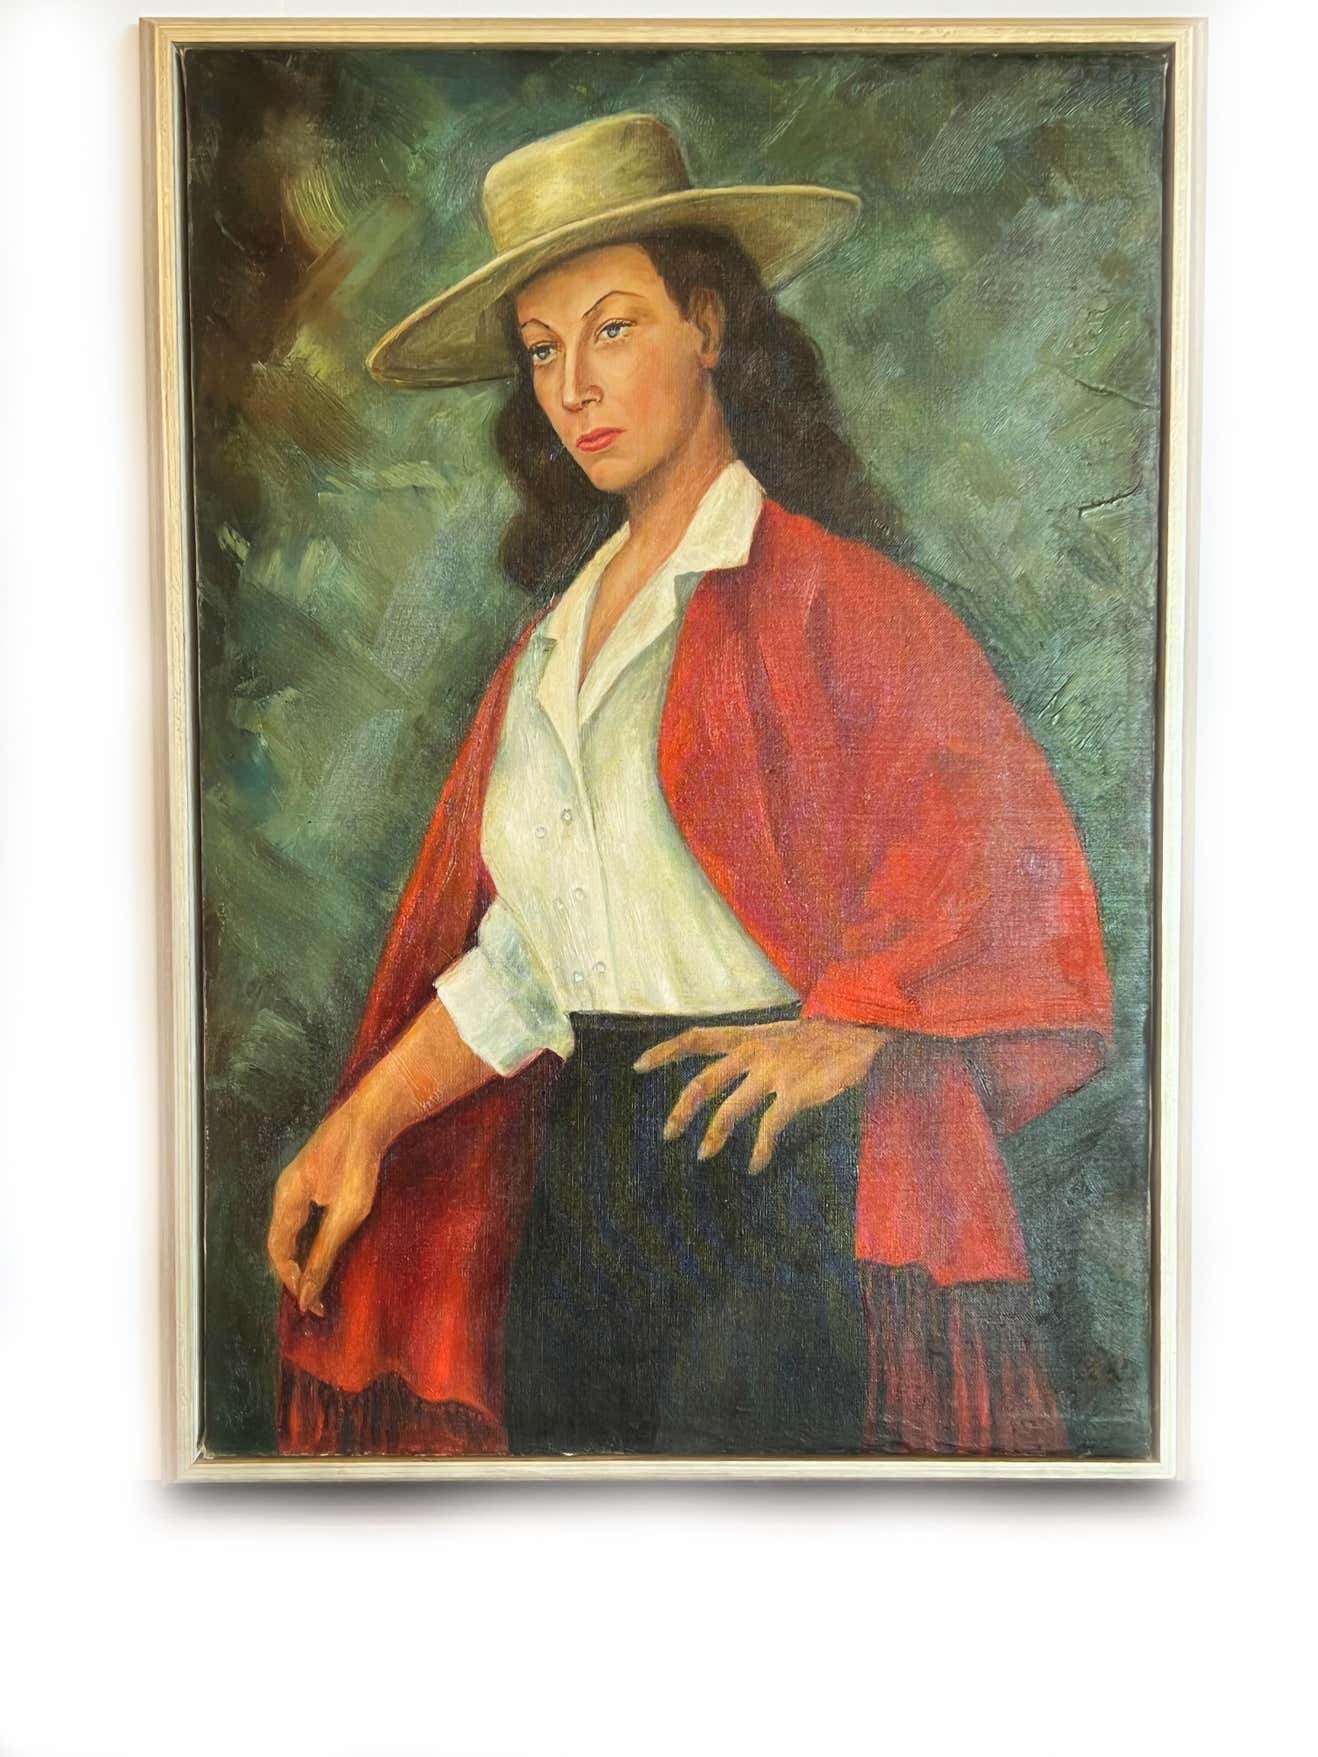 "Amazon" Horsewoman Portrait - Oil Painting on Canvas